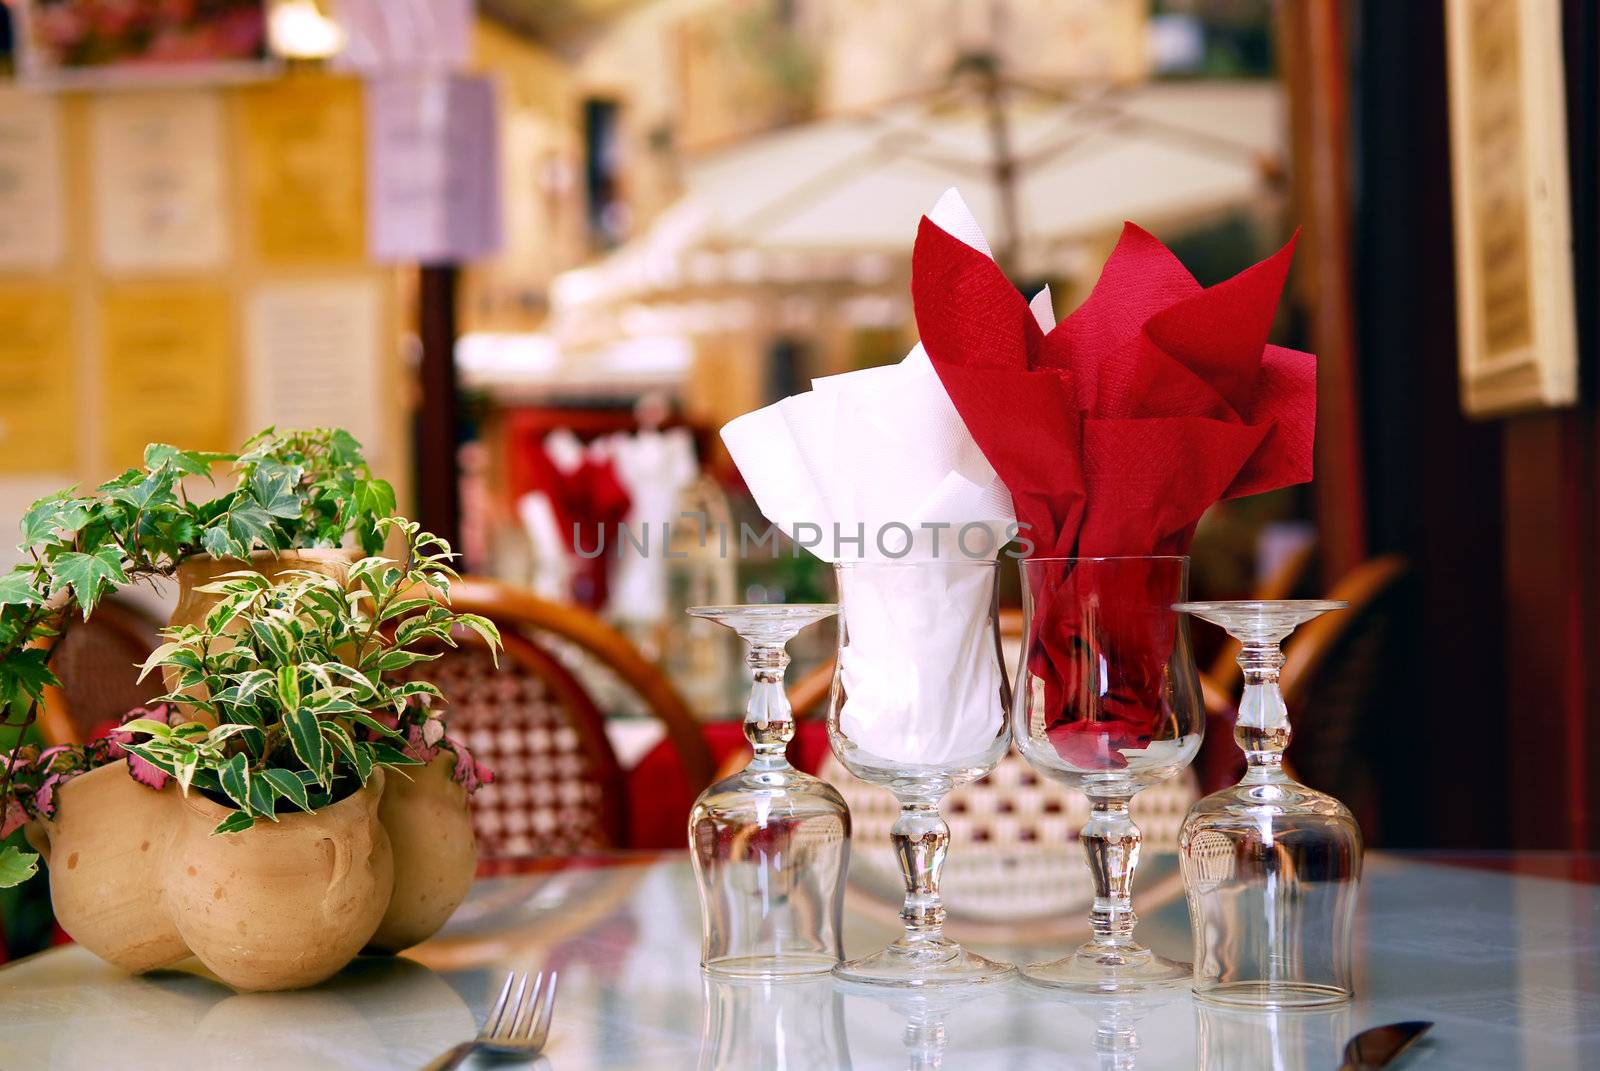 Outdoor restaurant patio on the street of Sarlat, Dordogne region, France